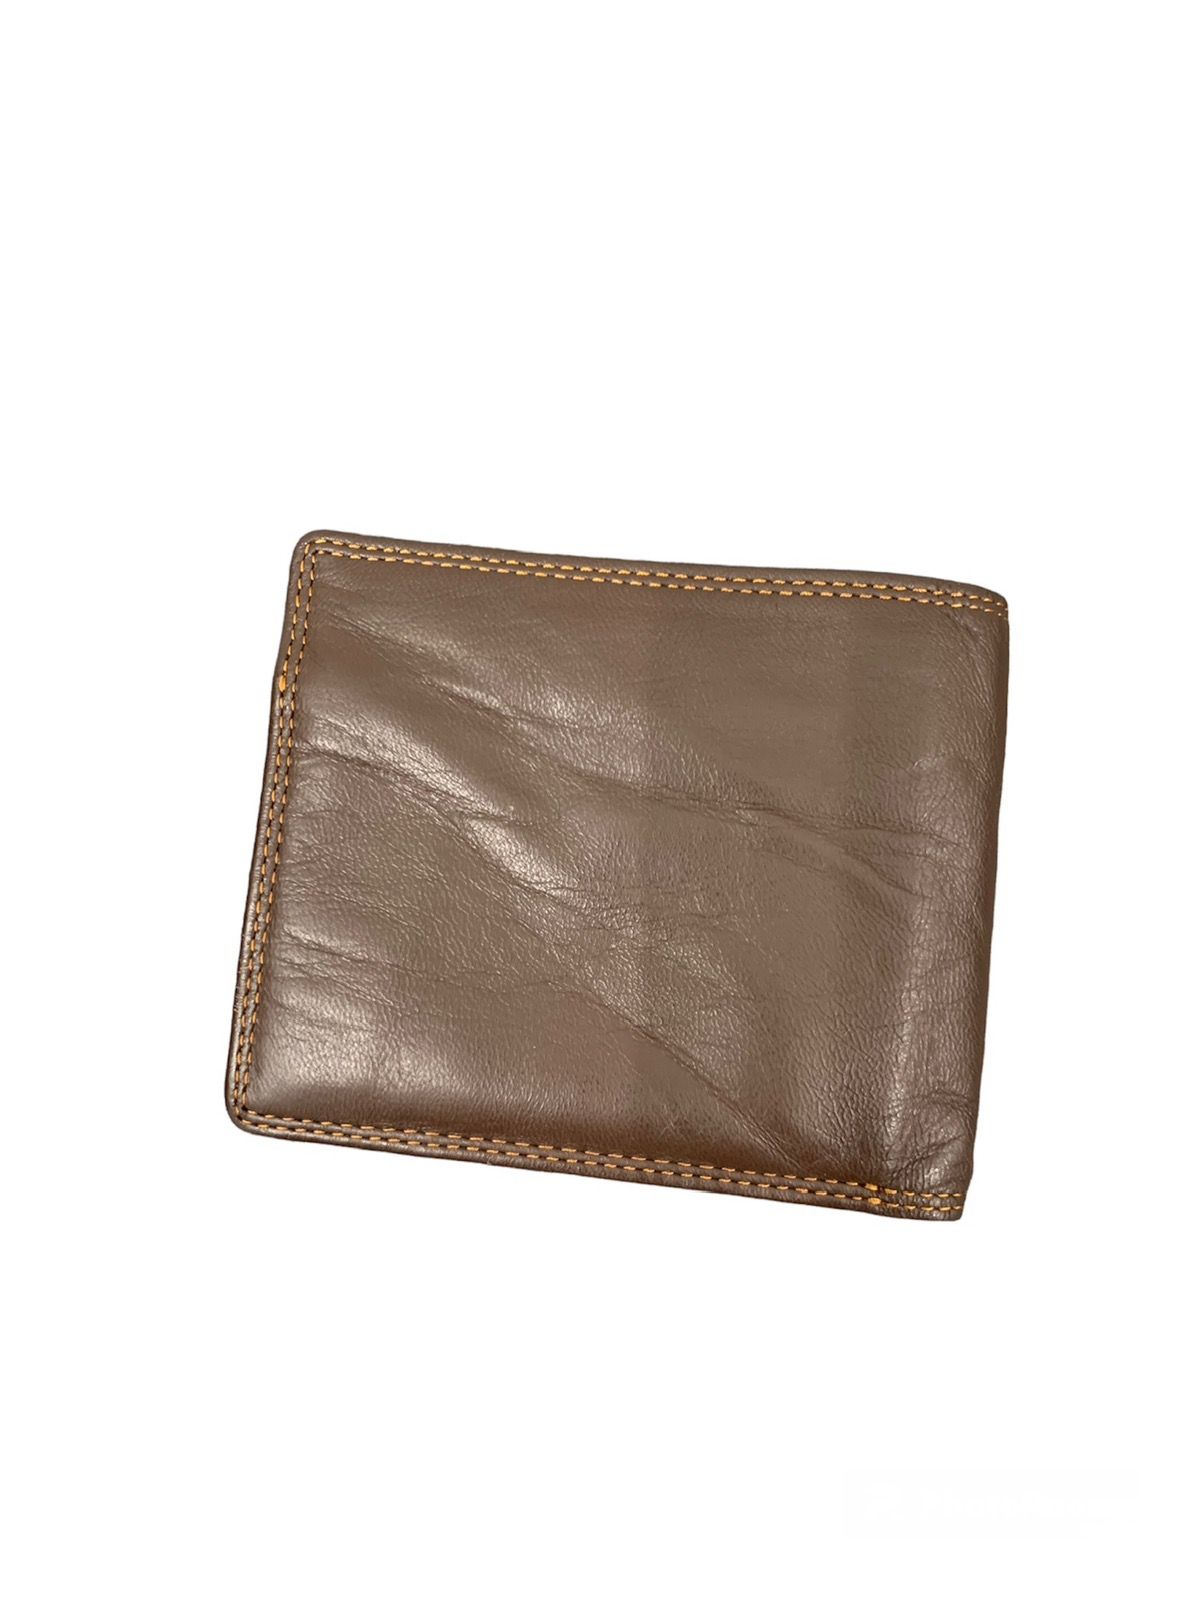 JapaneseBrand Kansai Yamamoto Leather Wallet - 2